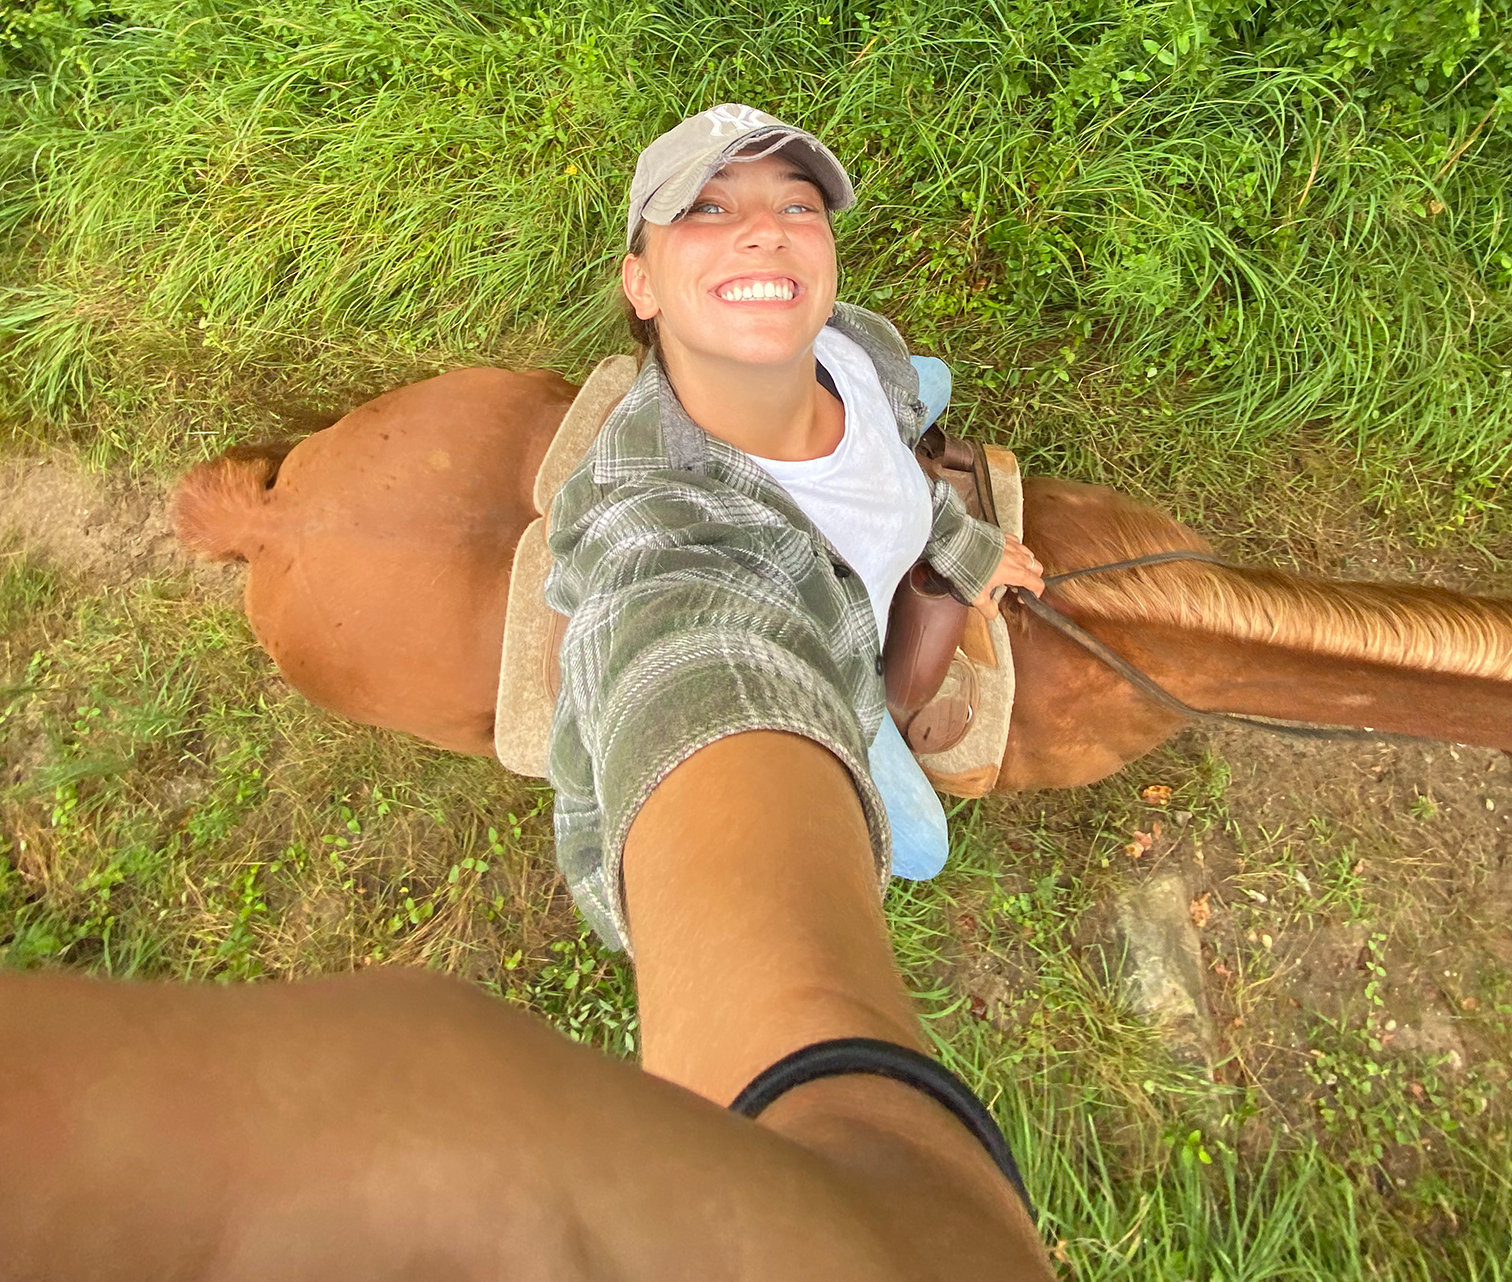 A woman on horseback smiles up at the camera